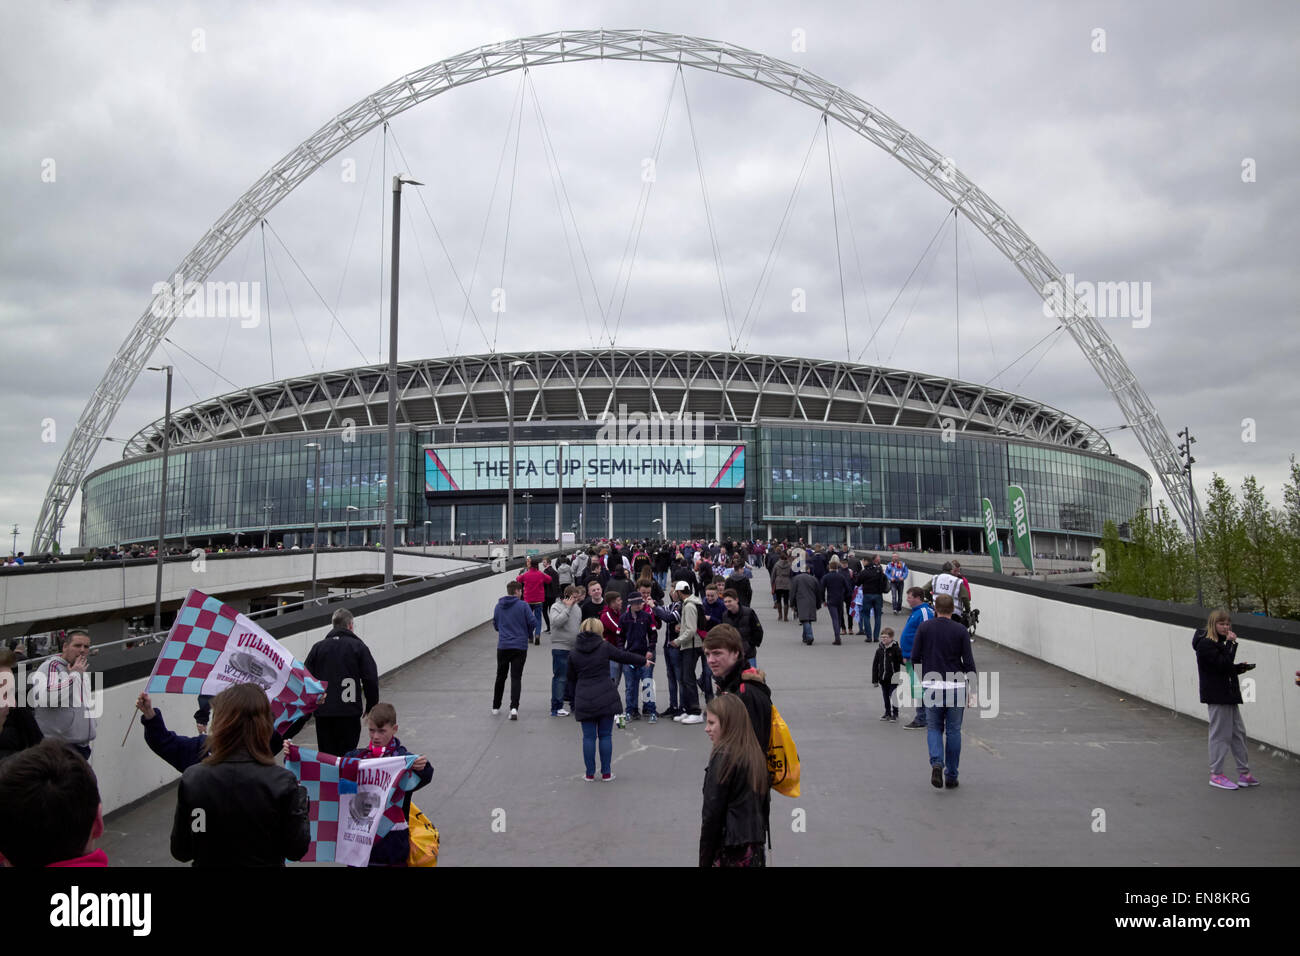 aston villa fans approach Wembley stadium on fa cup semi final day London UK Stock Photo